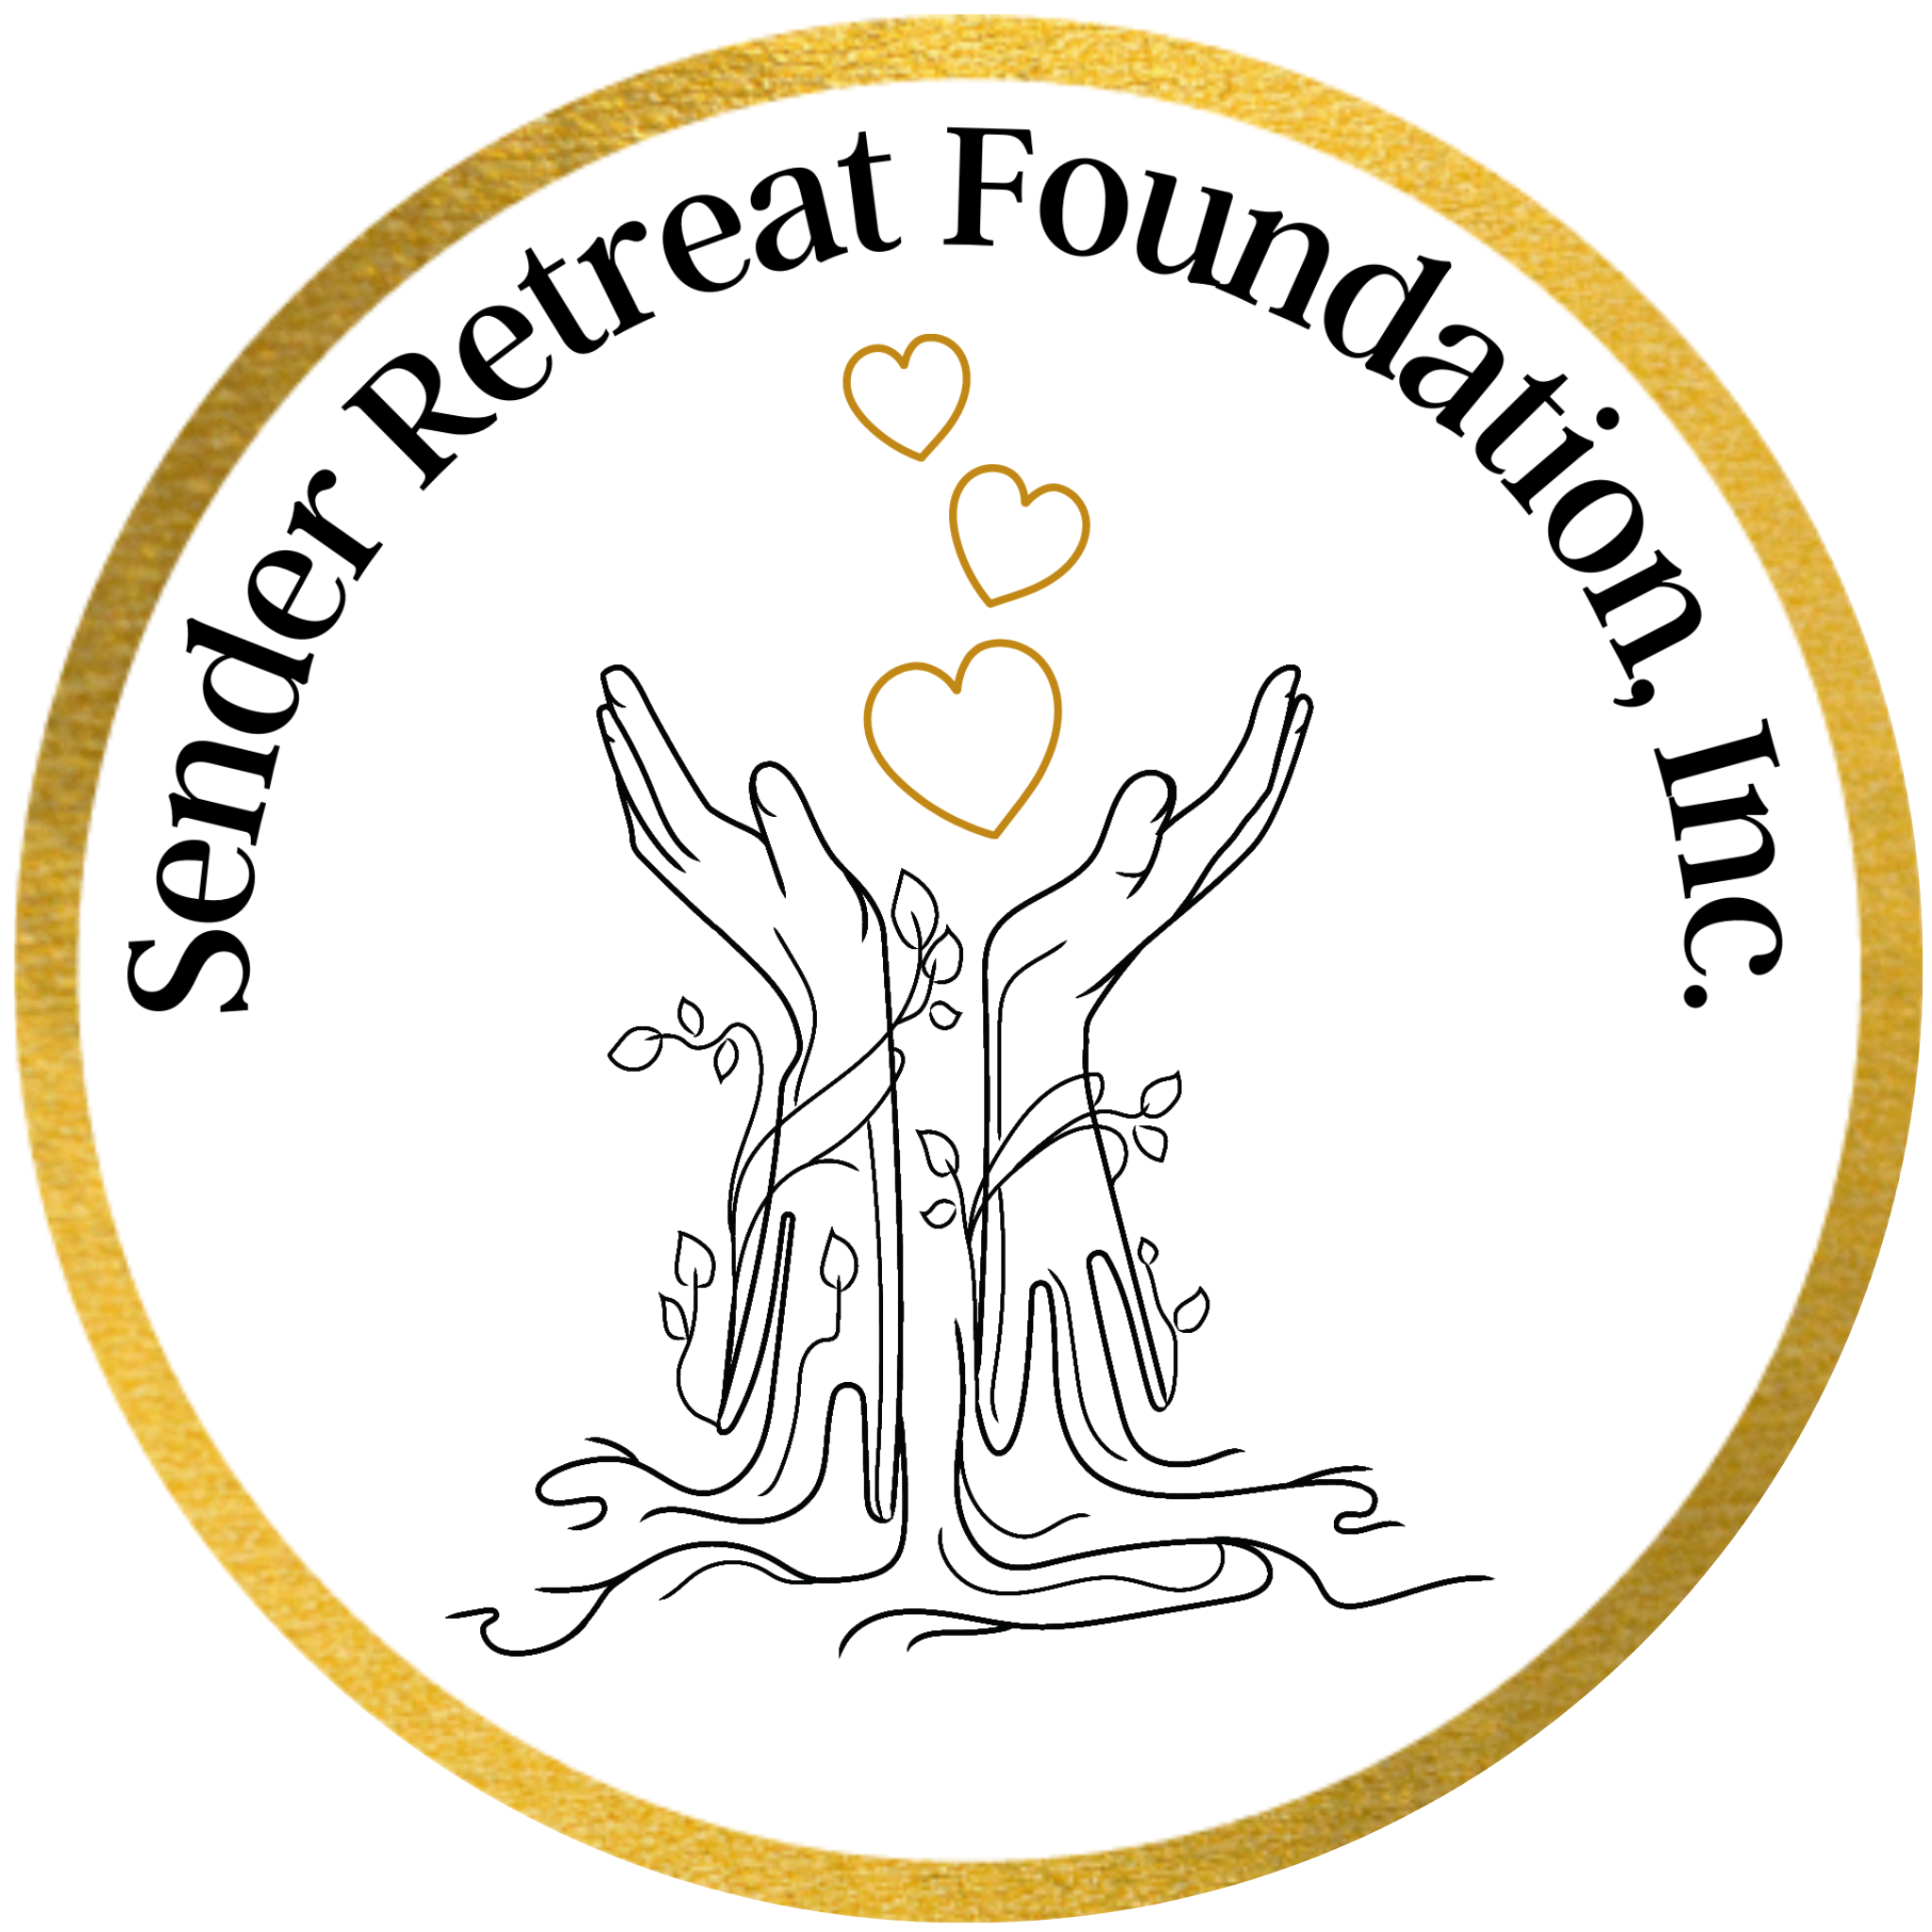 Sender Retreat Foundation, Inc.